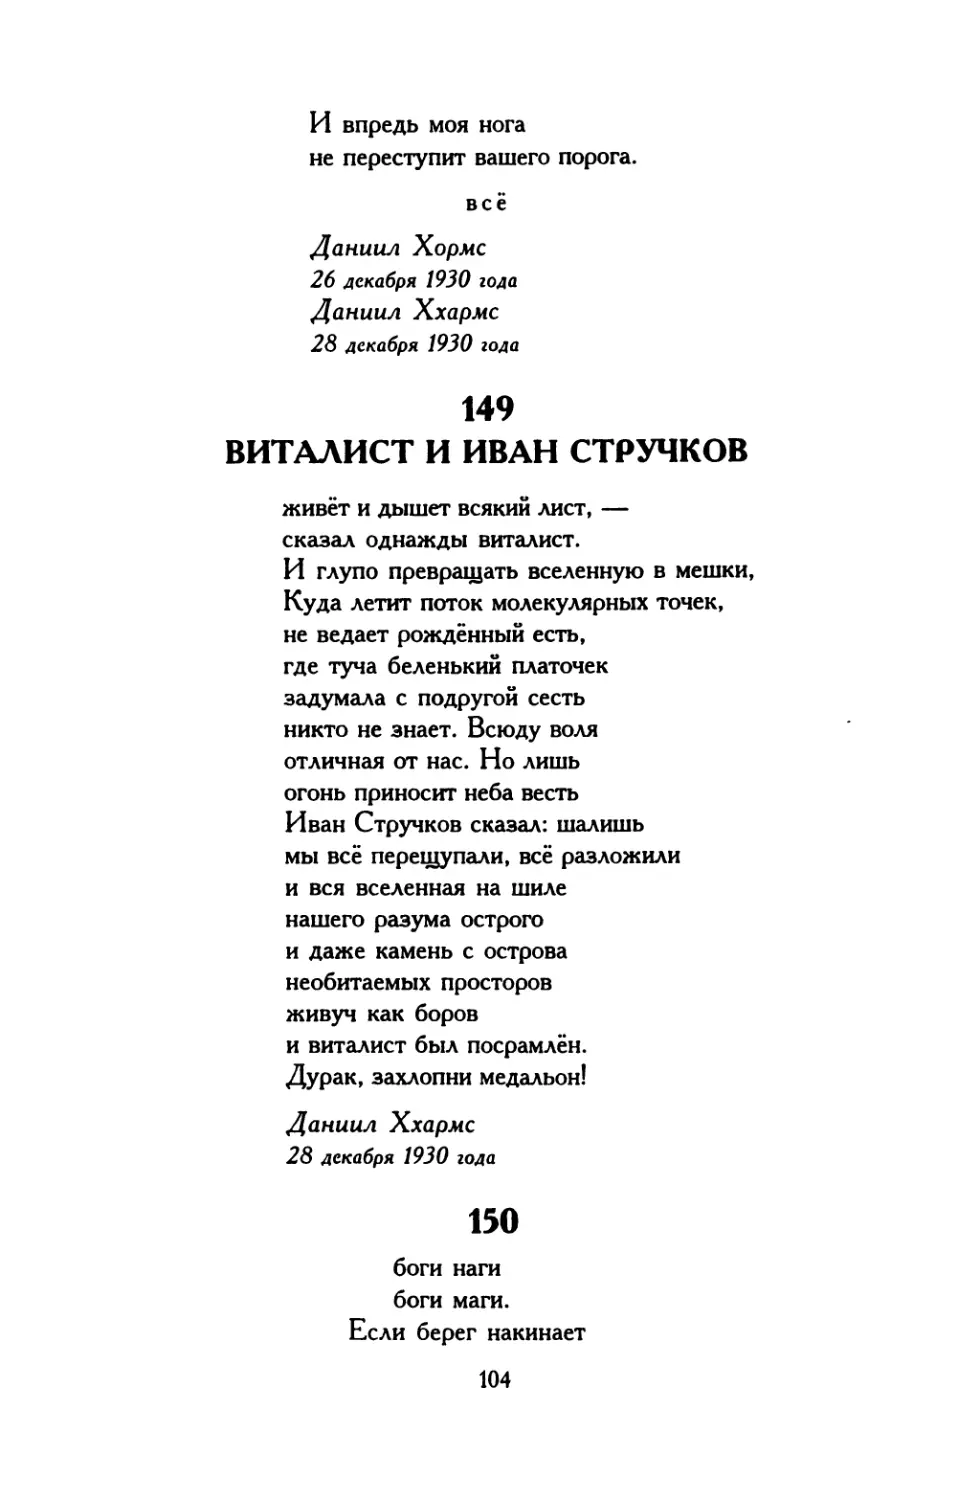 149. Виталист и Иван Стручков
150. «боги наги...»